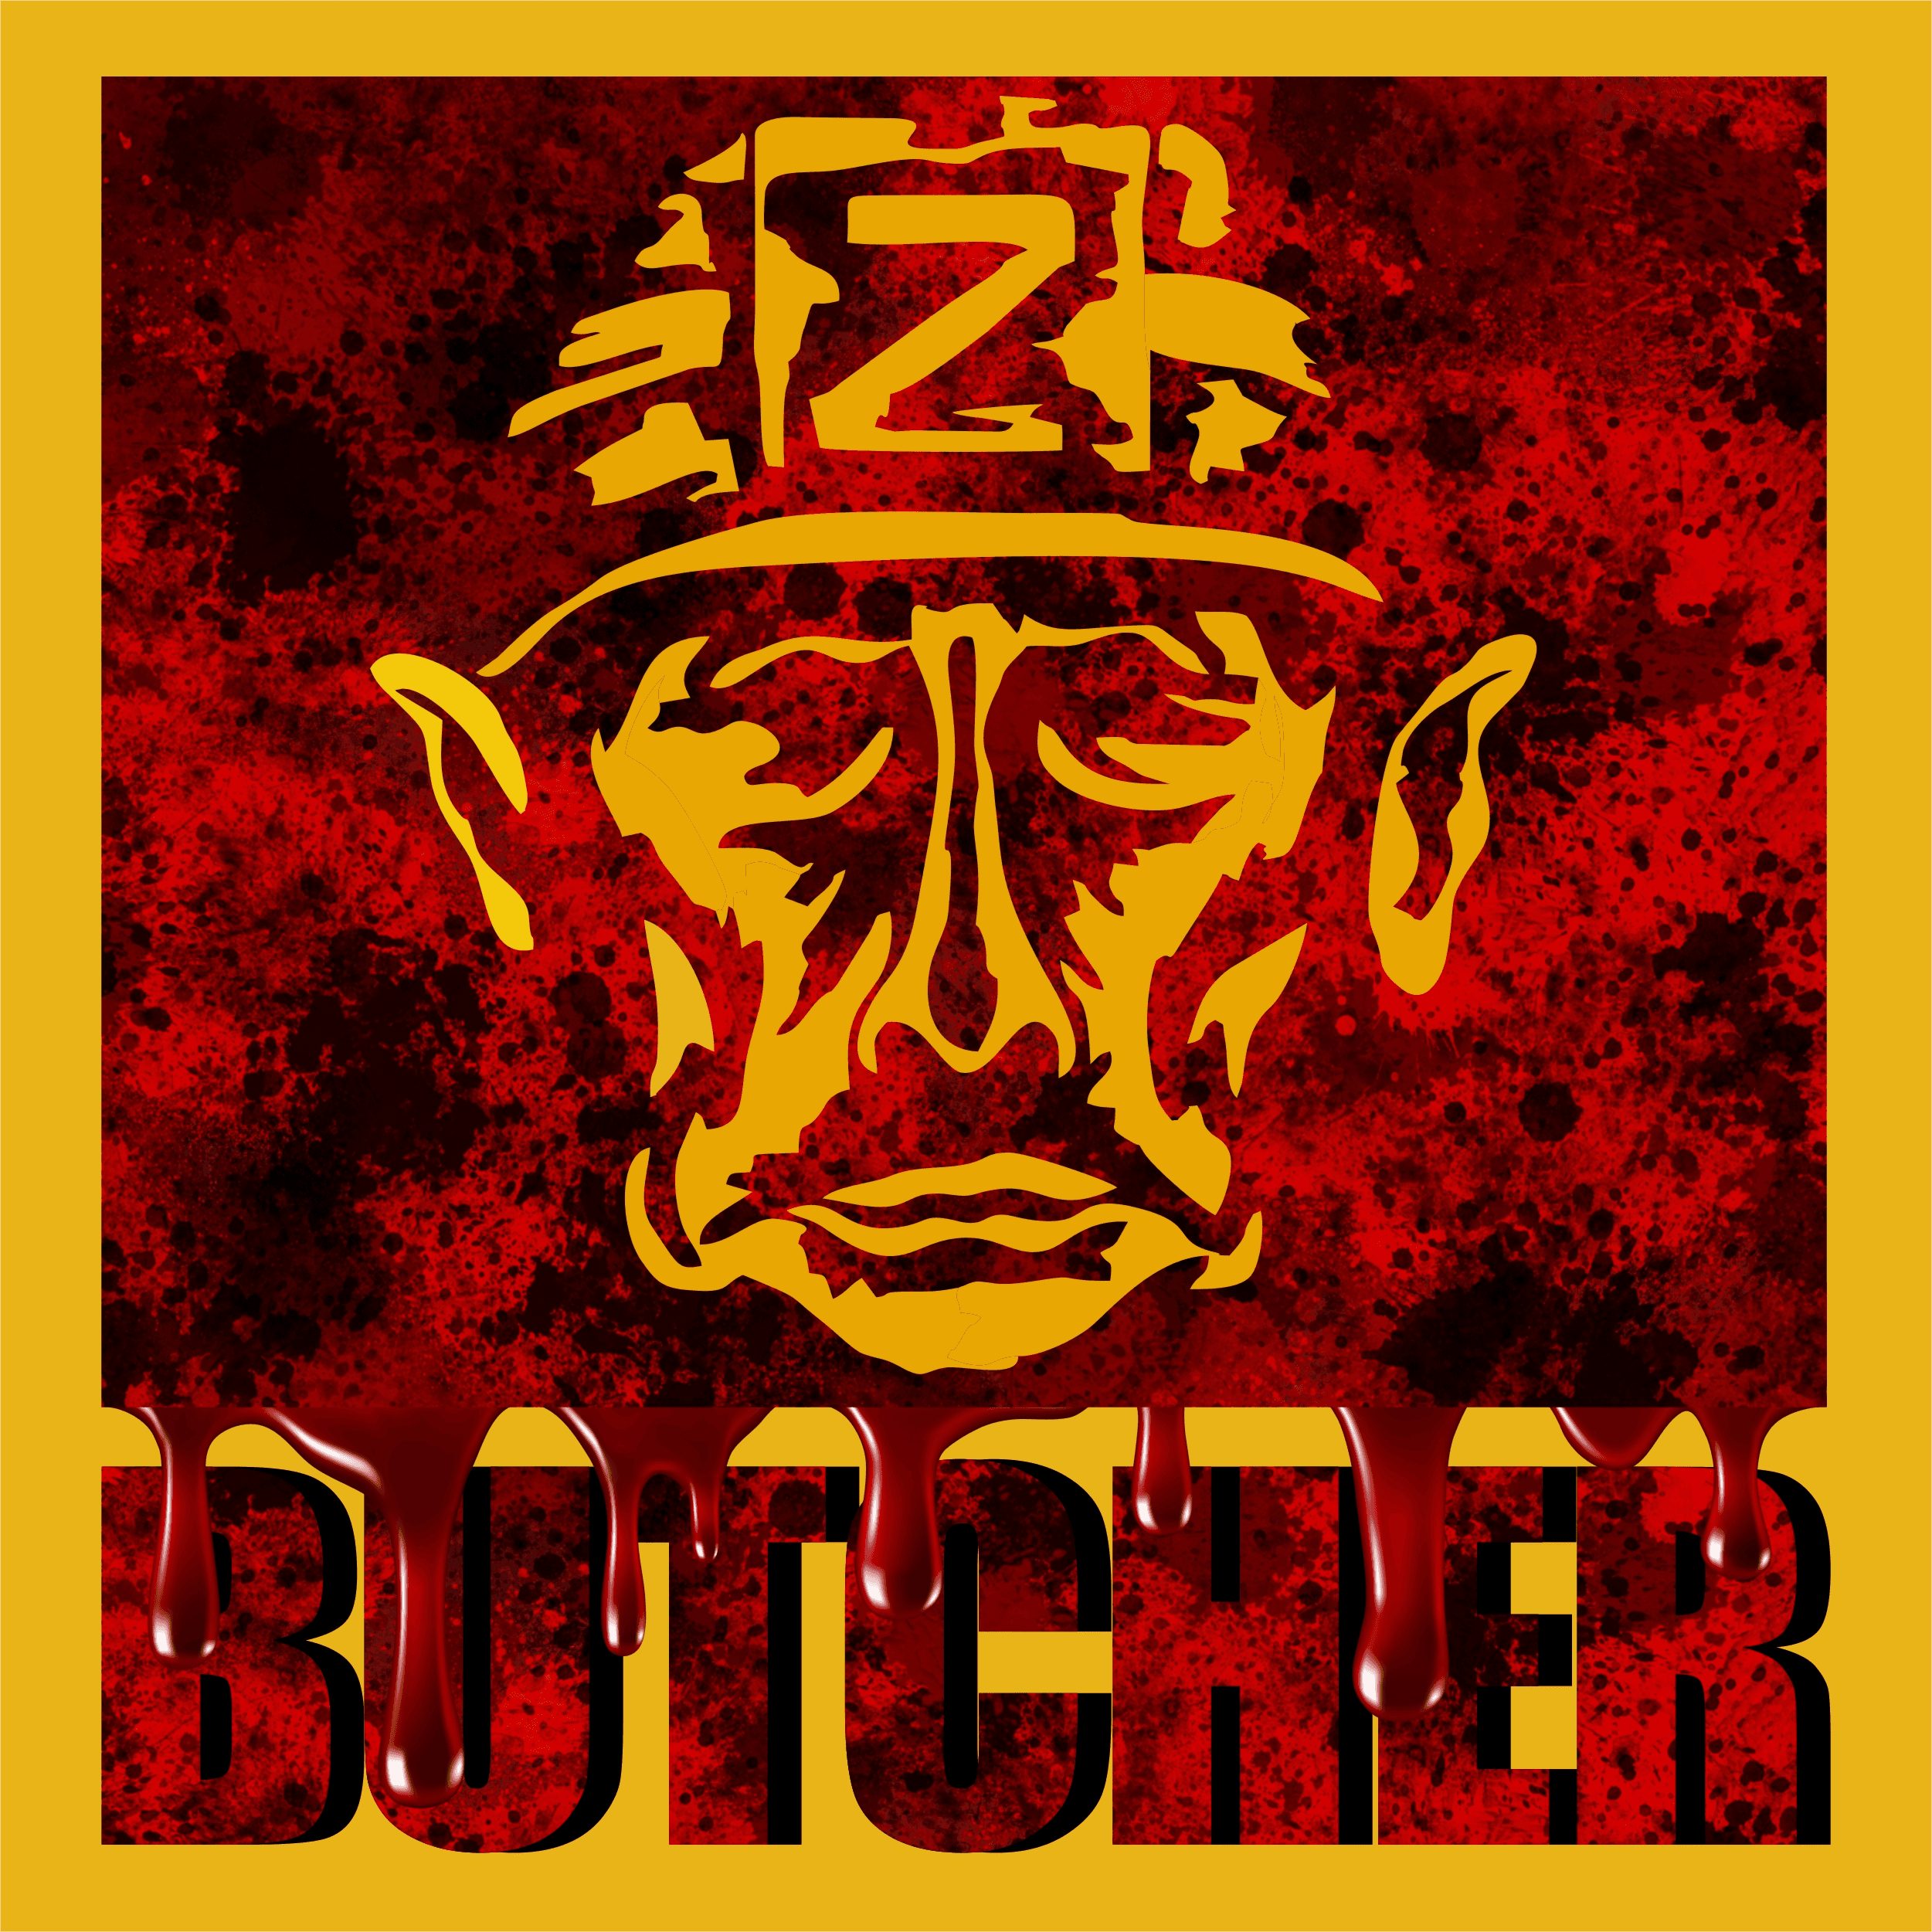 Butcher#1